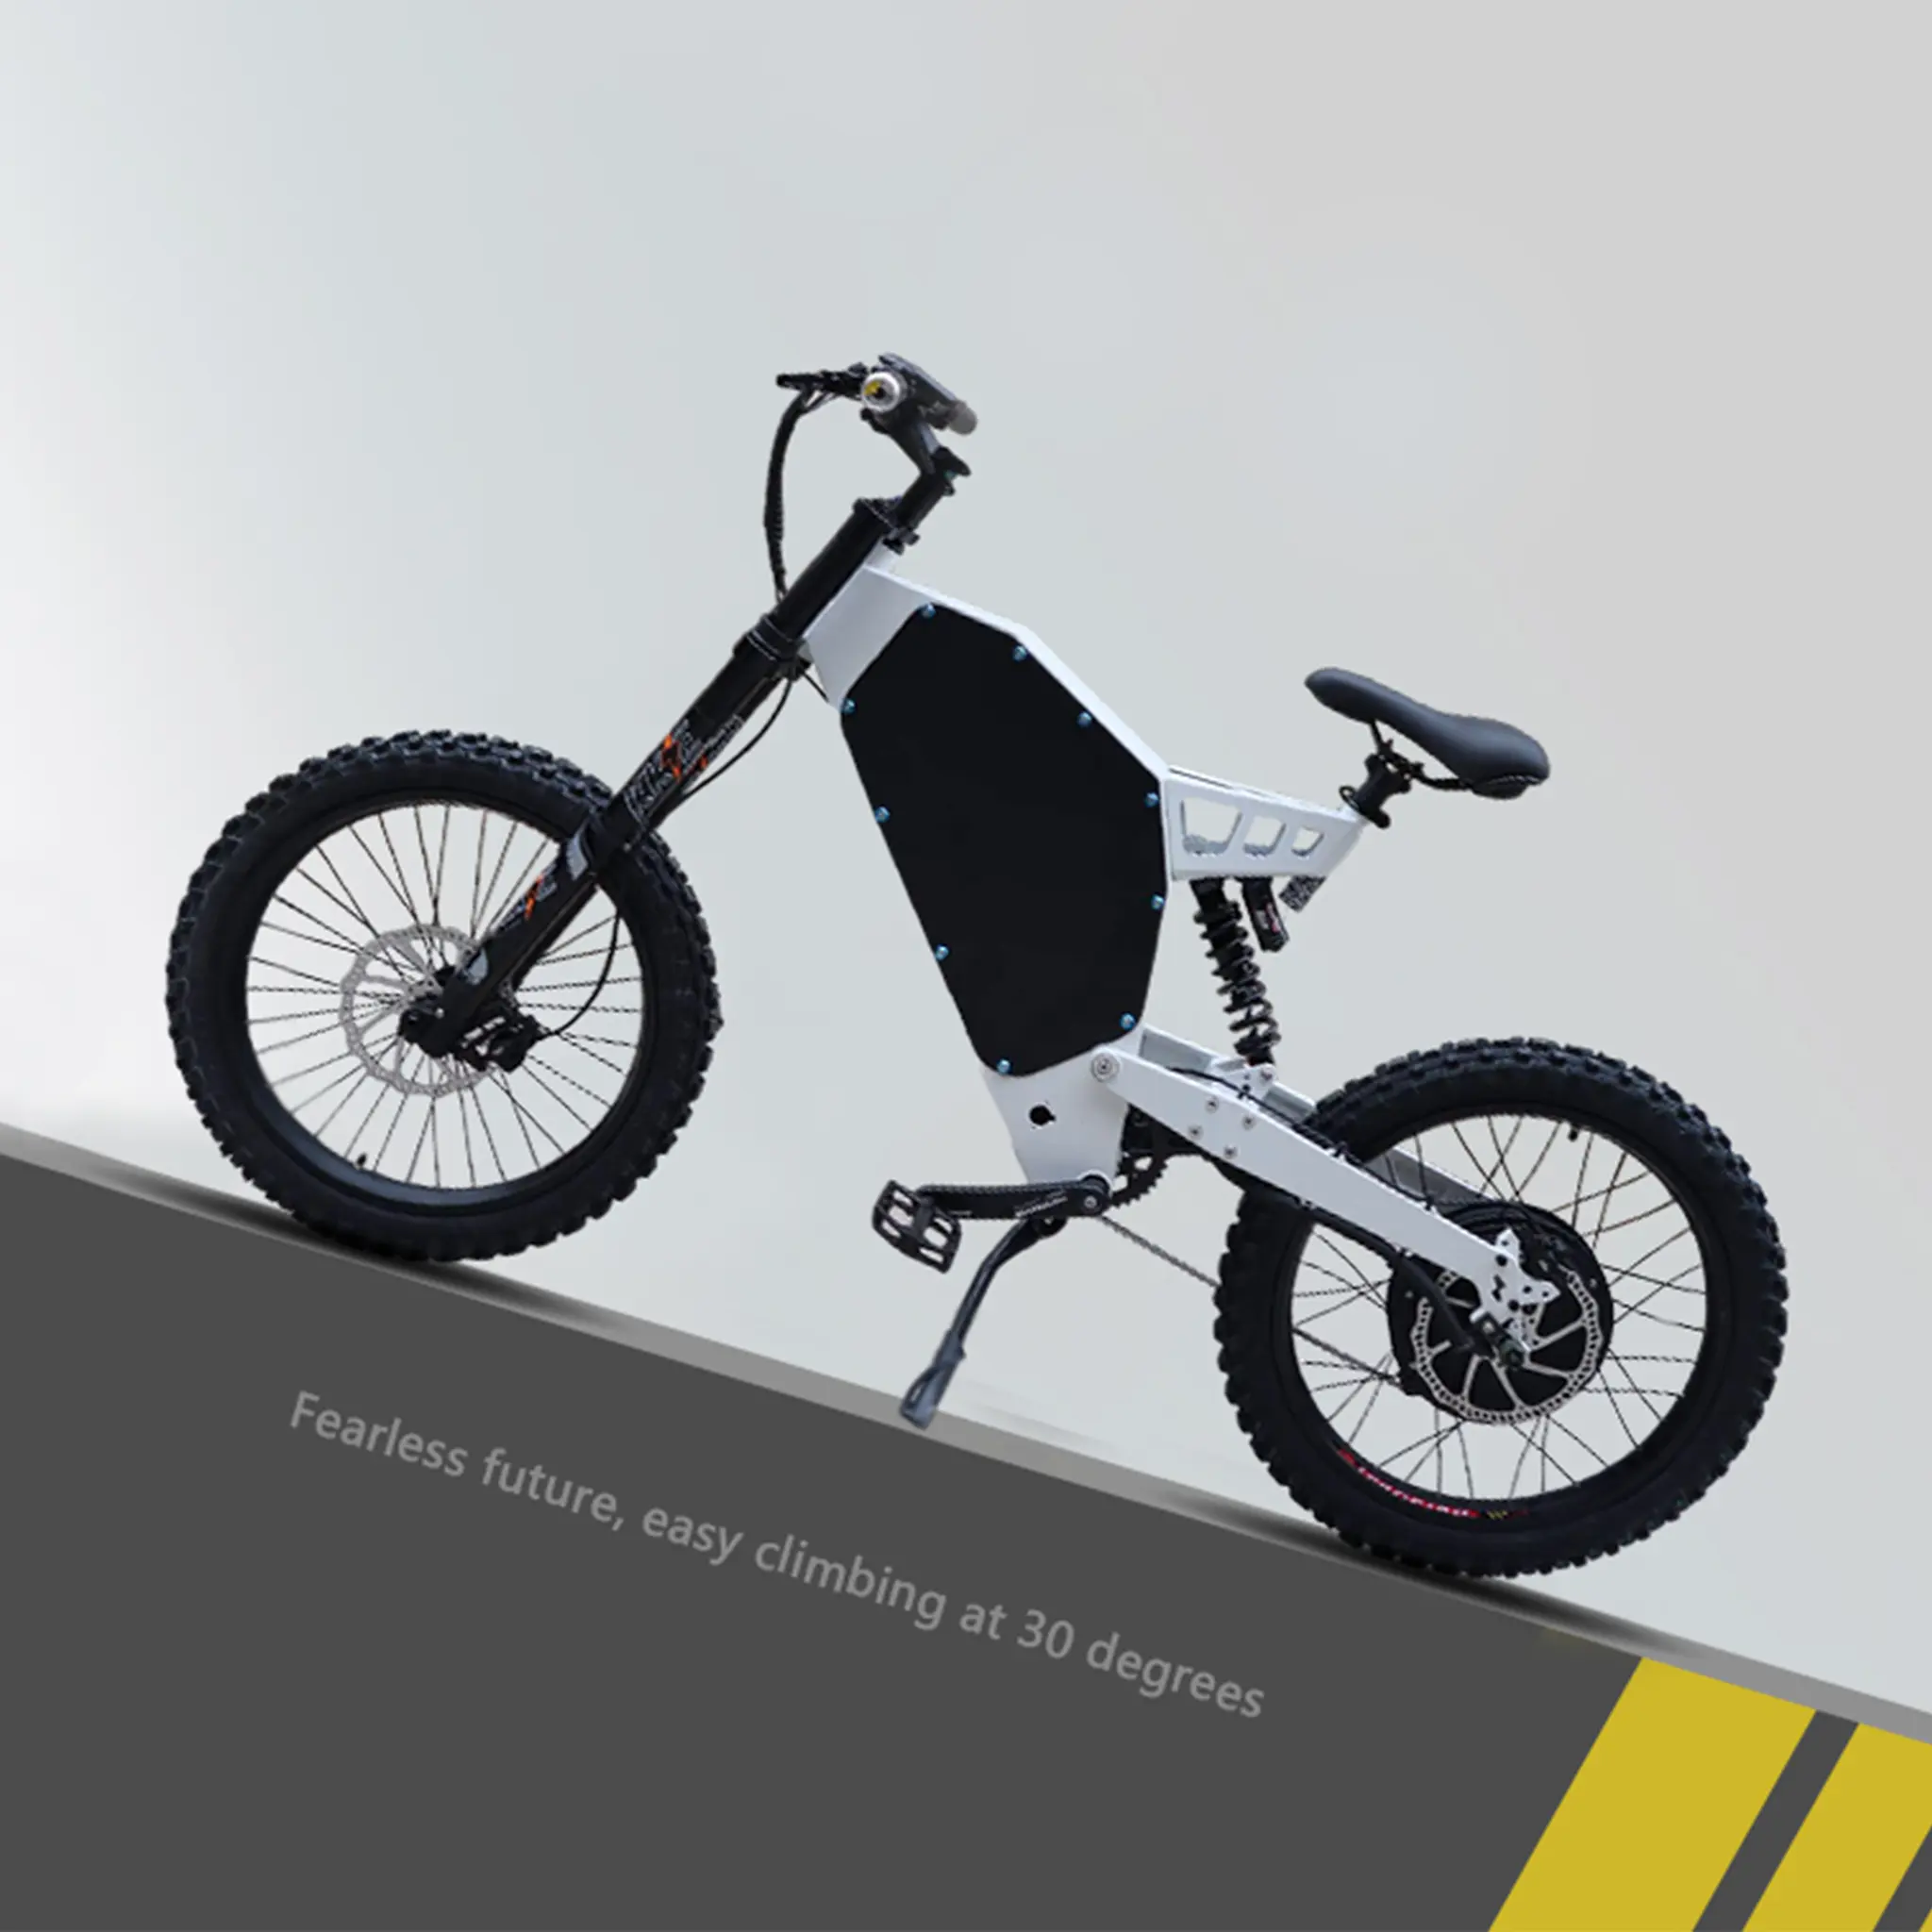 2021 Partai Besar 120Km/Jam Listrik Sepeda Motor Sepeda 72v8000w Listrik Sepeda Motor Trail Enduro Sepeda dengan Baterai